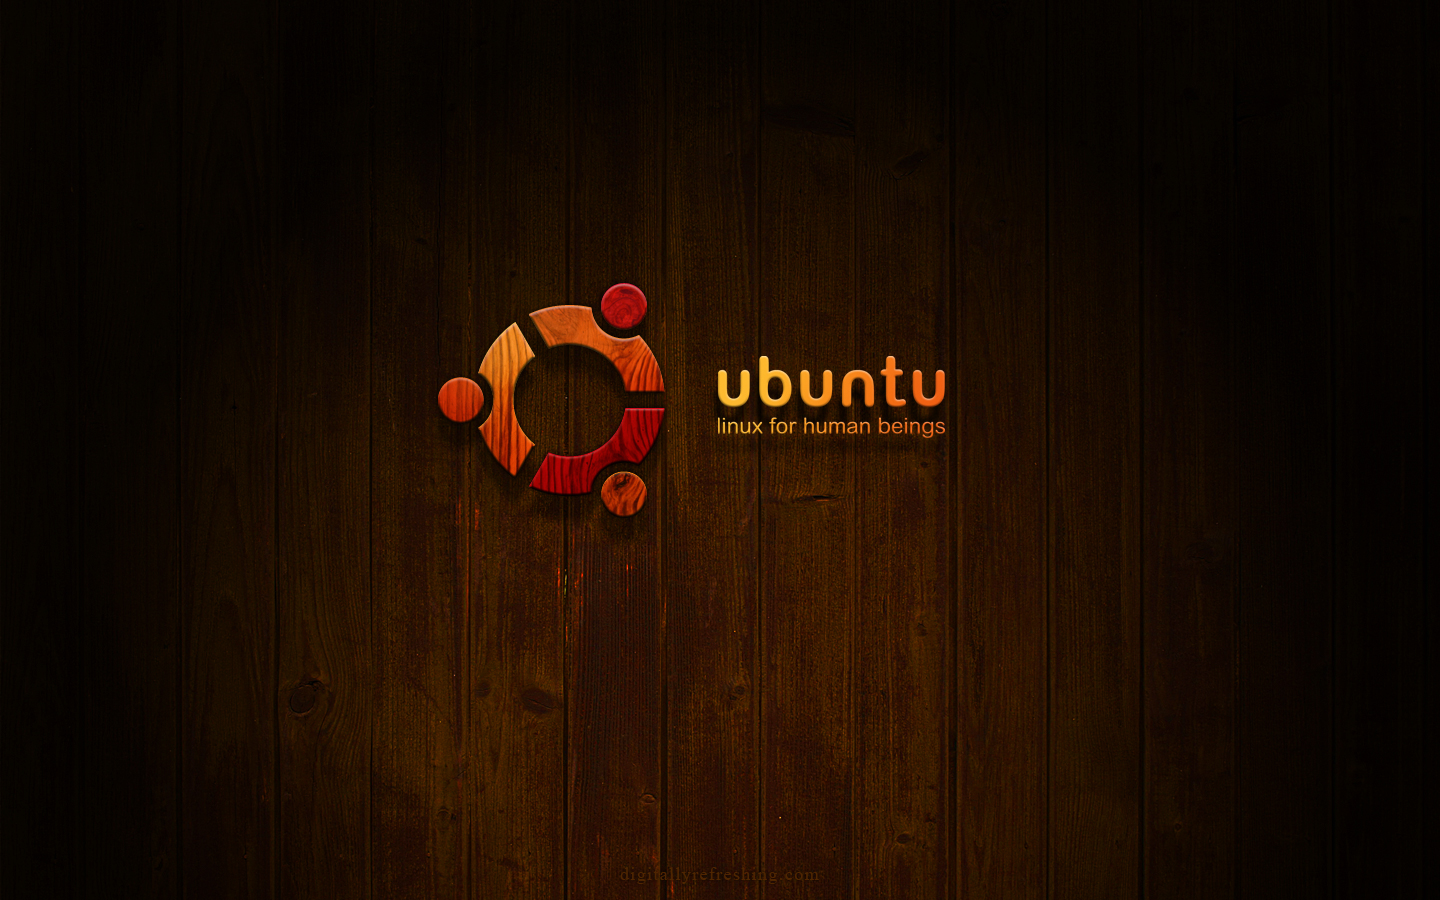  Ubuntu kertas dinding